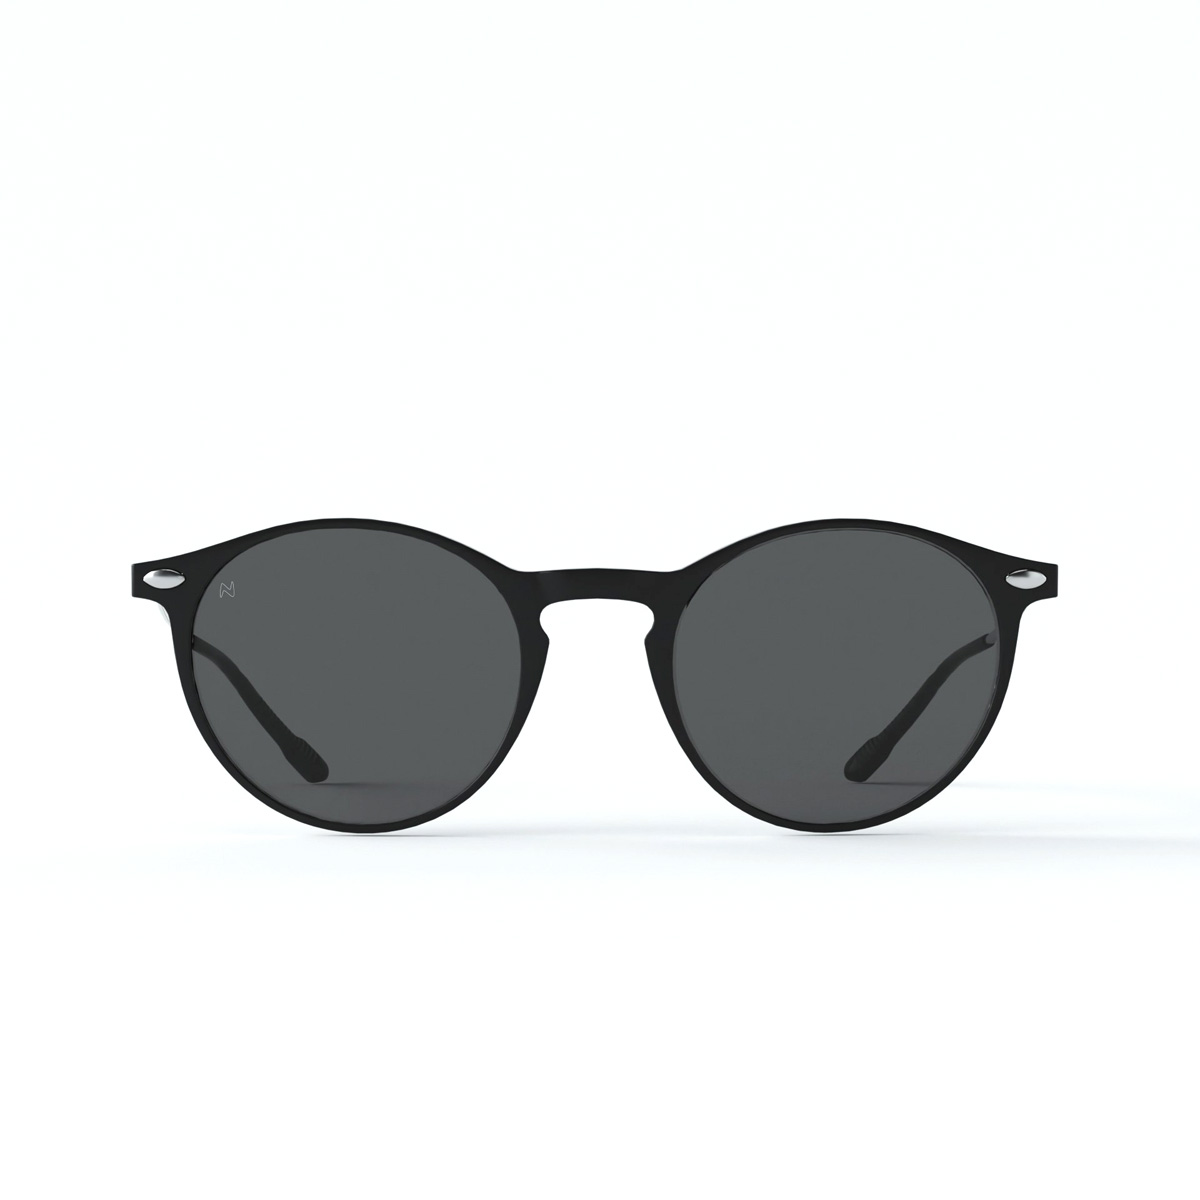 Nooz - Sunglasses - Cruz - Black